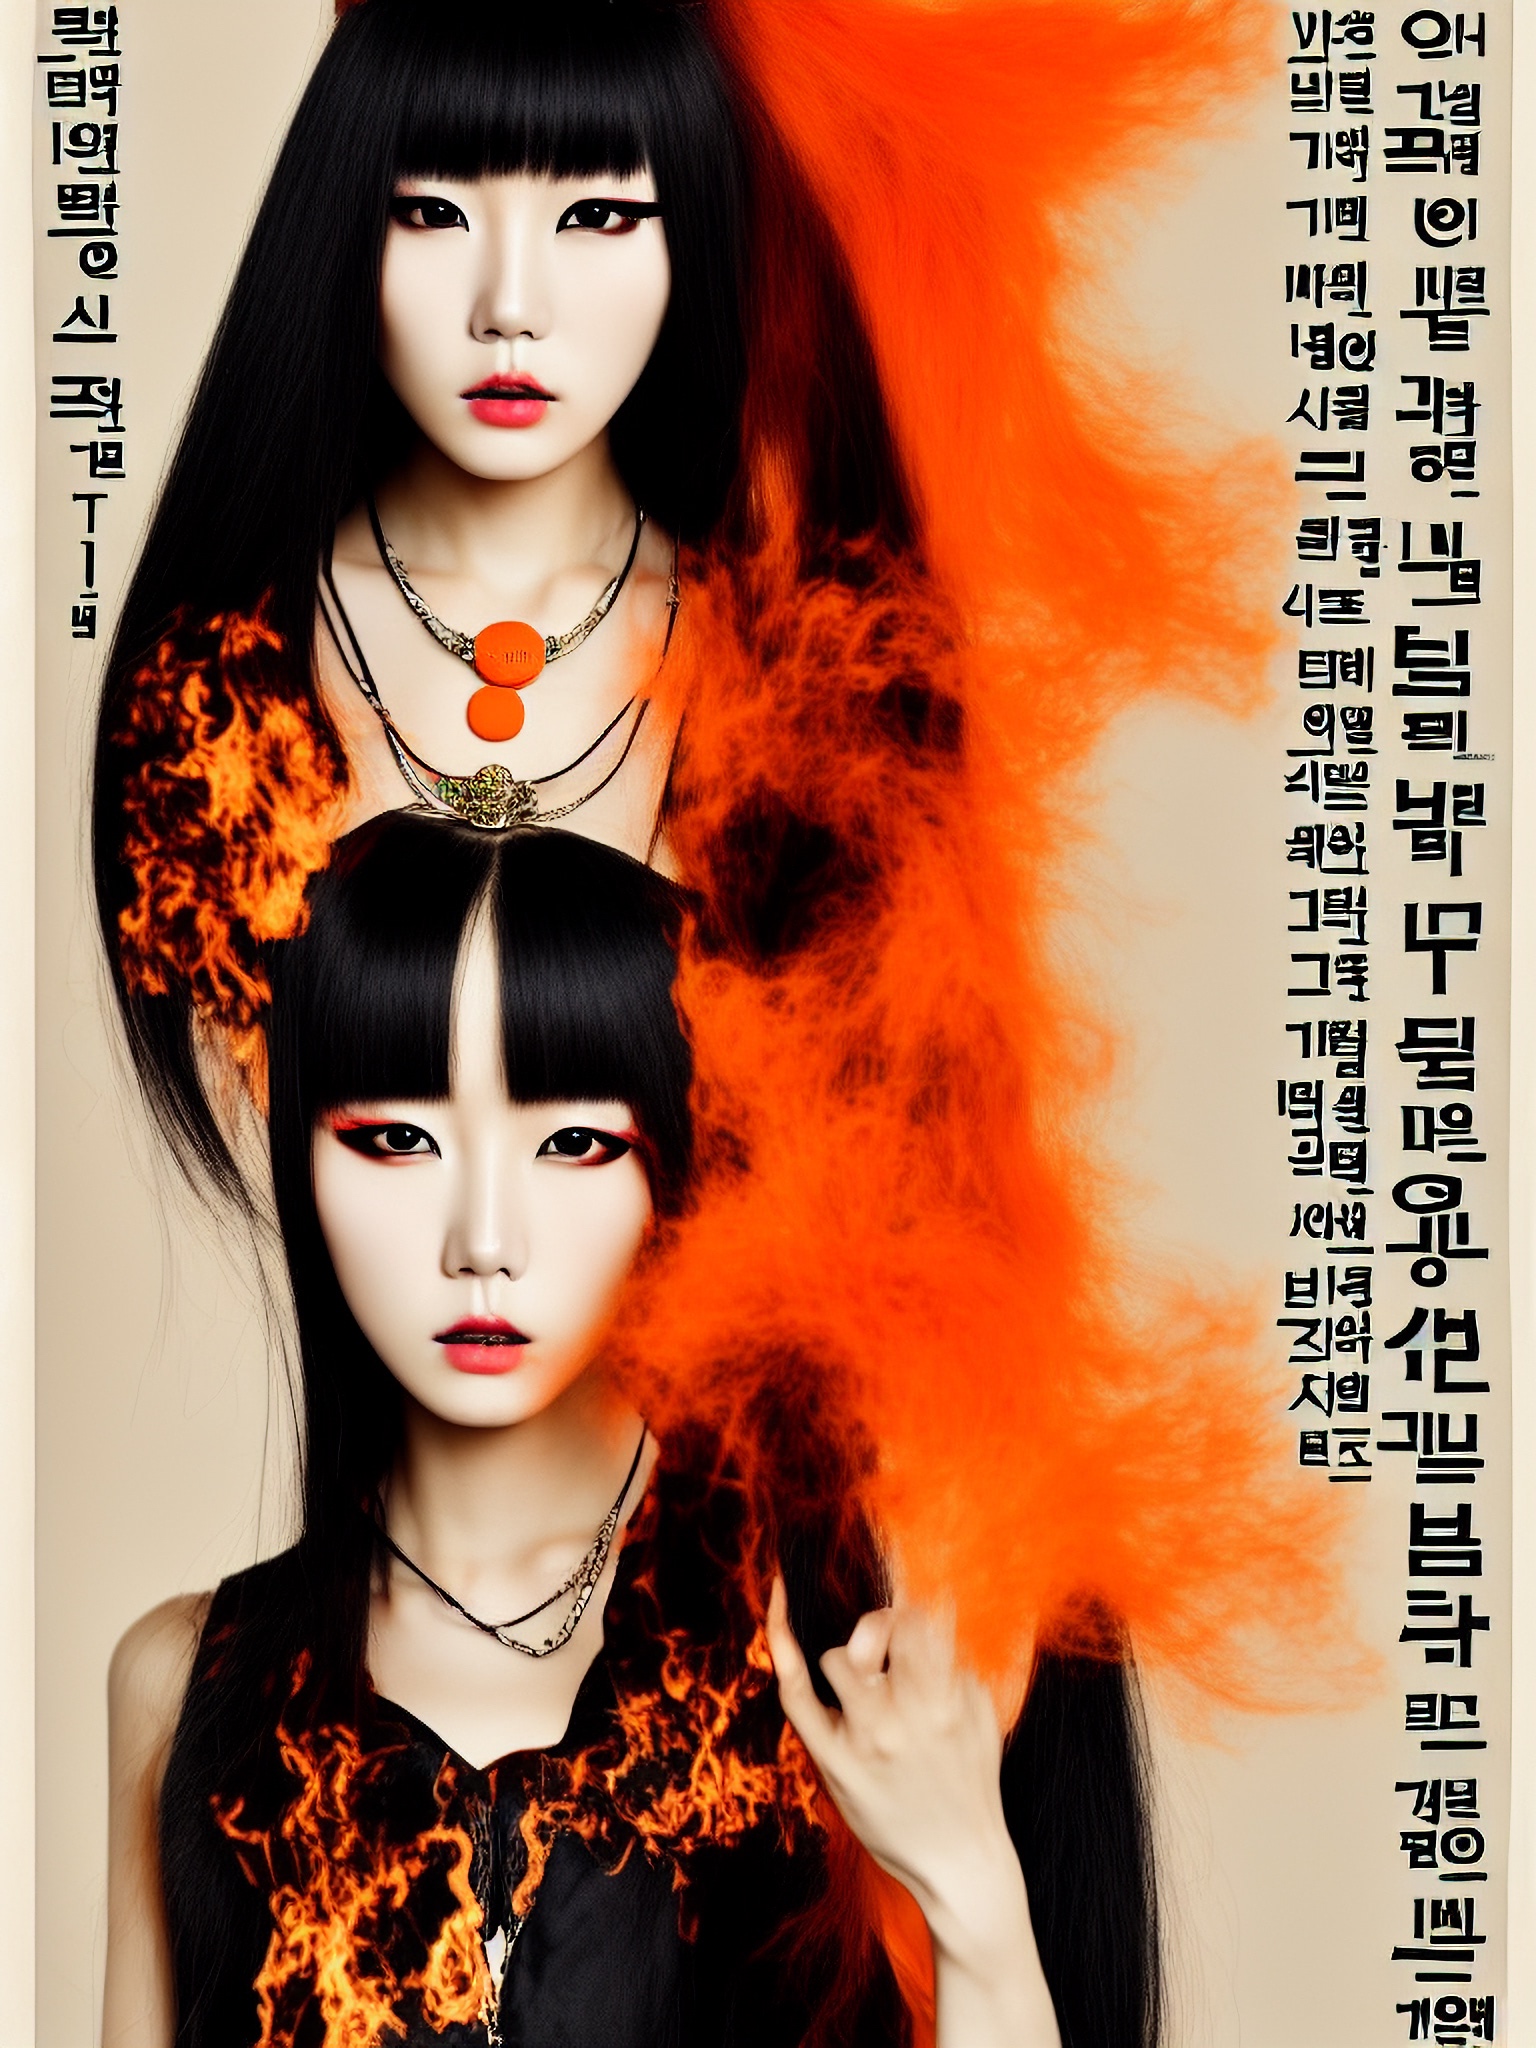 propaganda-poster-black-orange-asia-korea-4